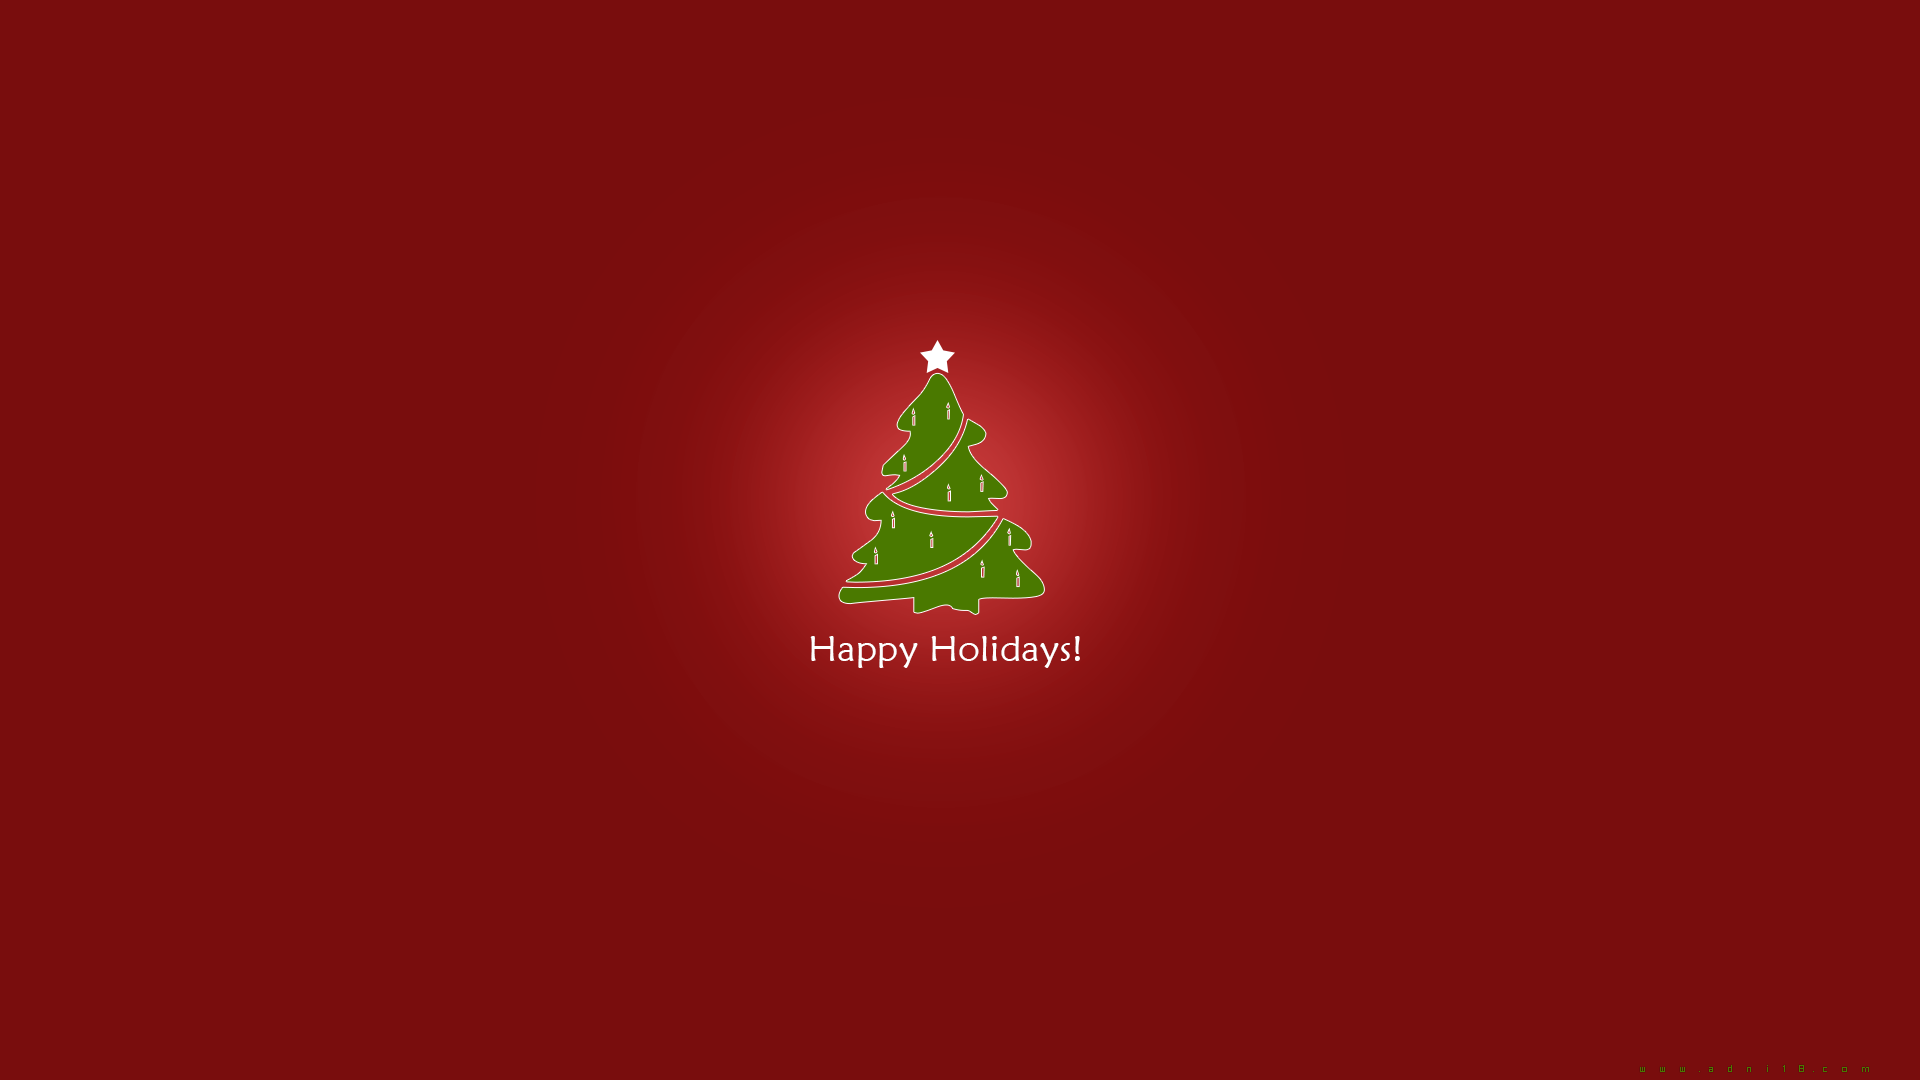 Free High Resolution Christmas themes, wallpaper and icons. Christmas greetings Cards